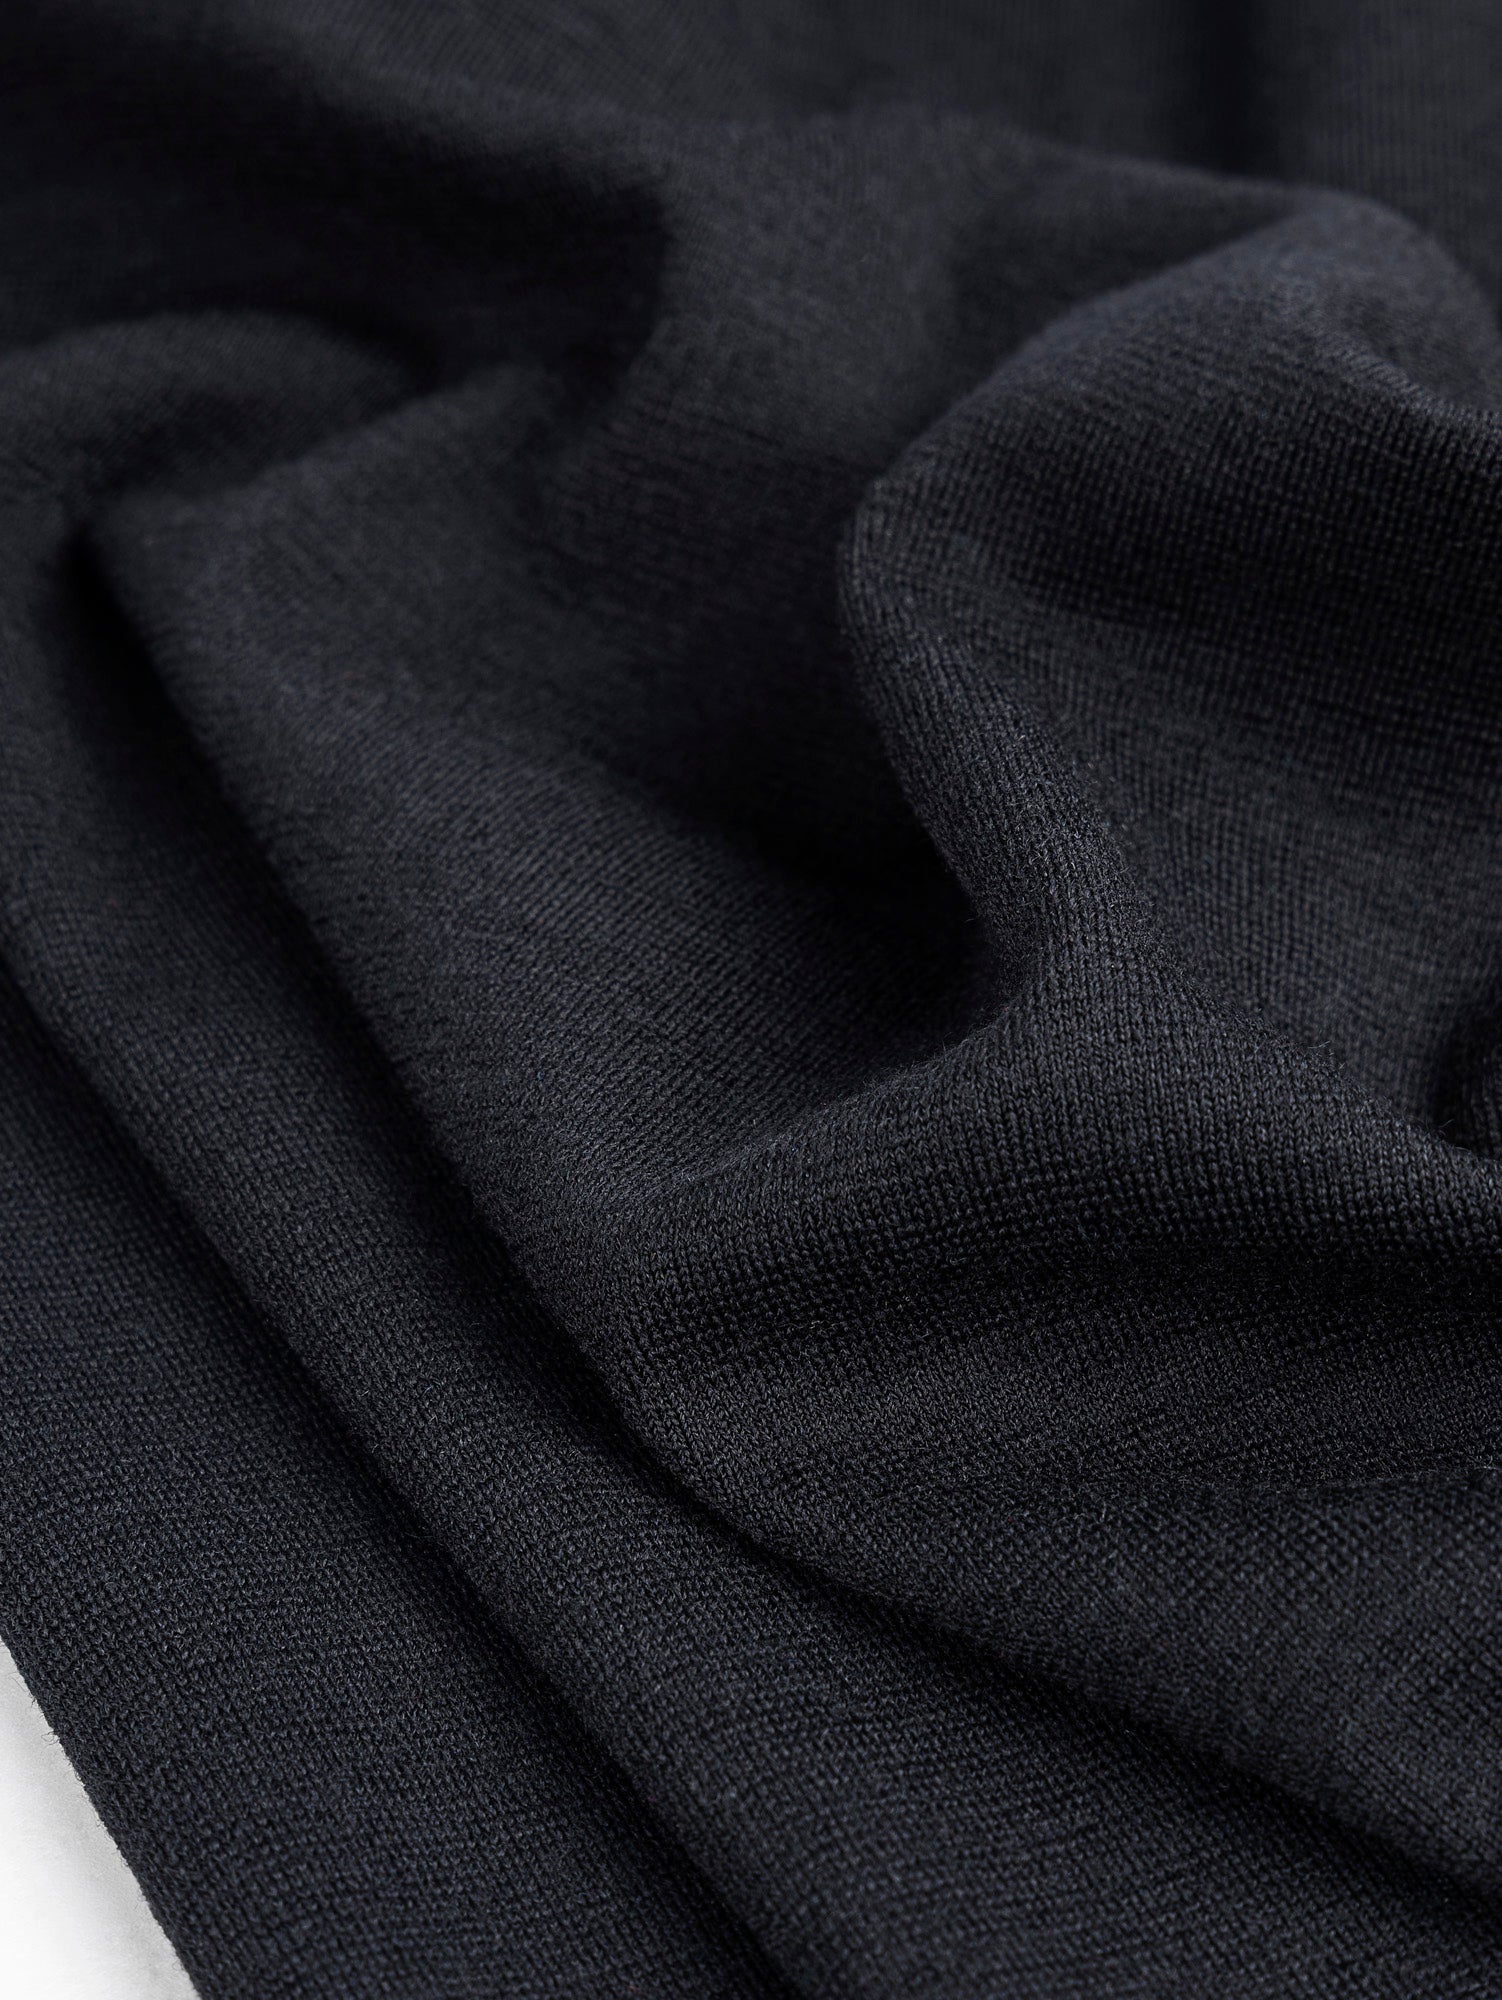 Midweight 100% Merino Wool Interlock Knit Deadstock -  Black | Core Fabrics